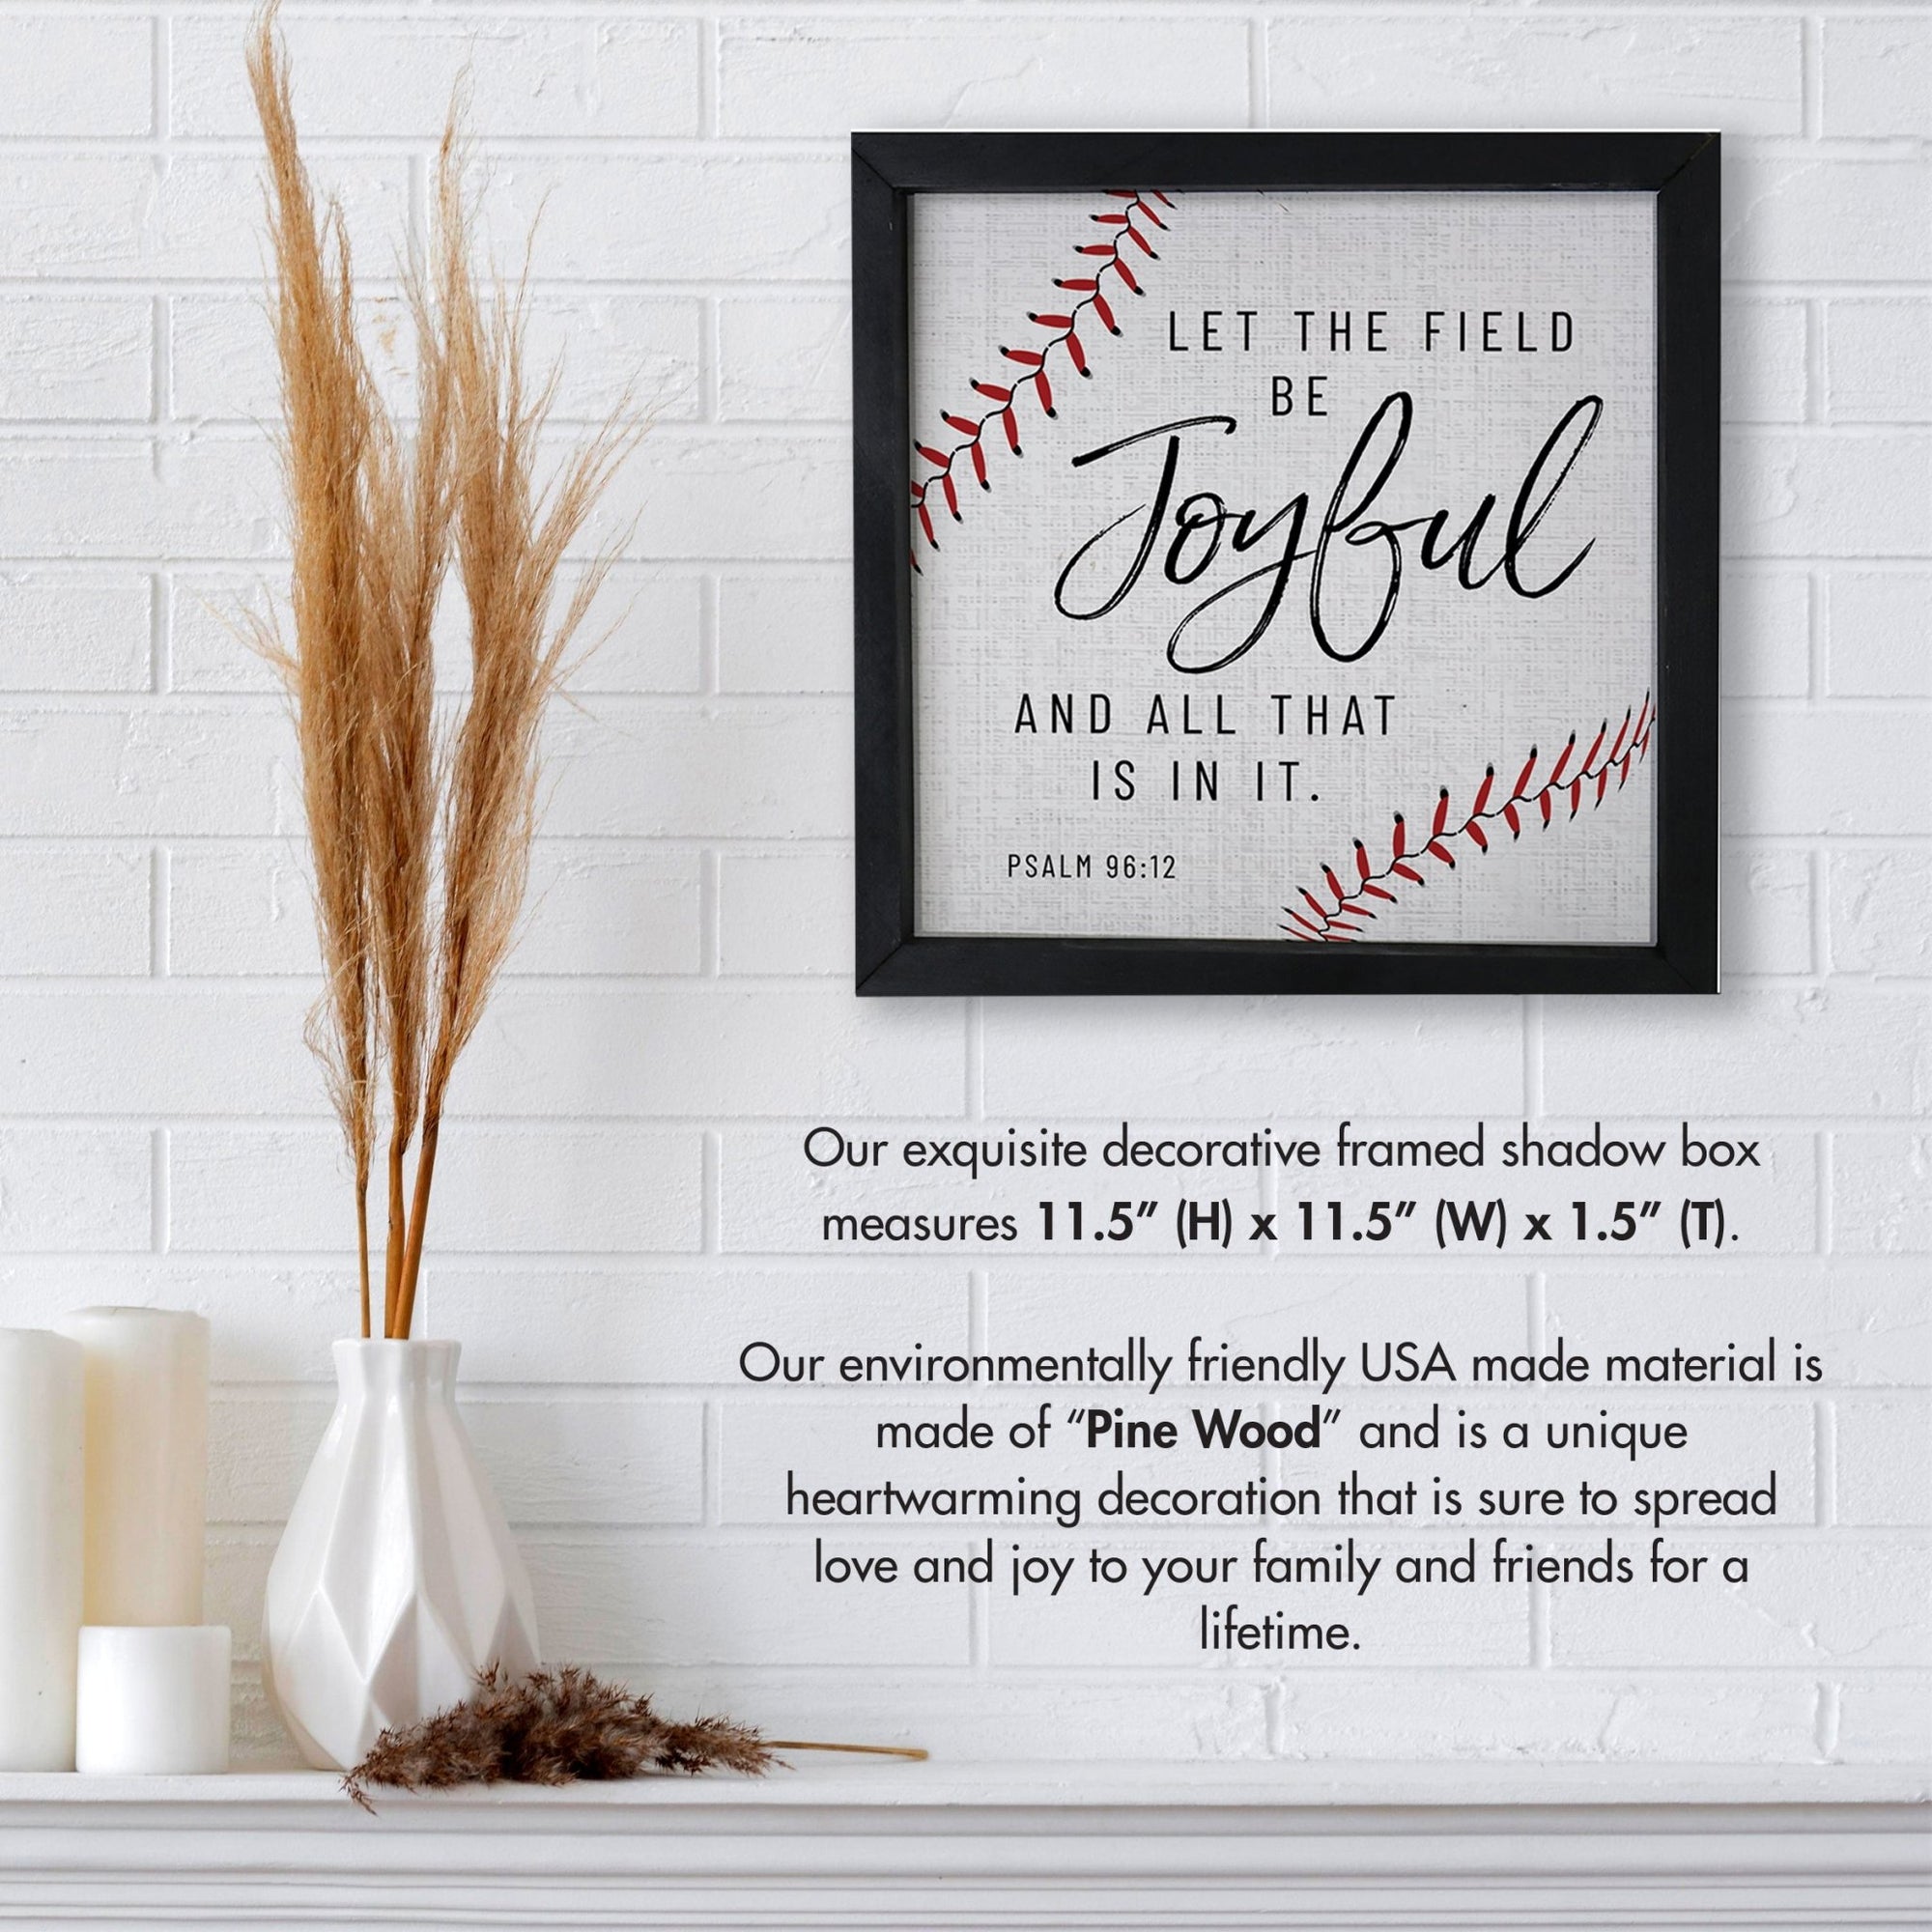 Elegant Baseball Framed Shadow Box Shelf Décor With Inspiring Bible Verses - Joyful - LifeSong Milestones